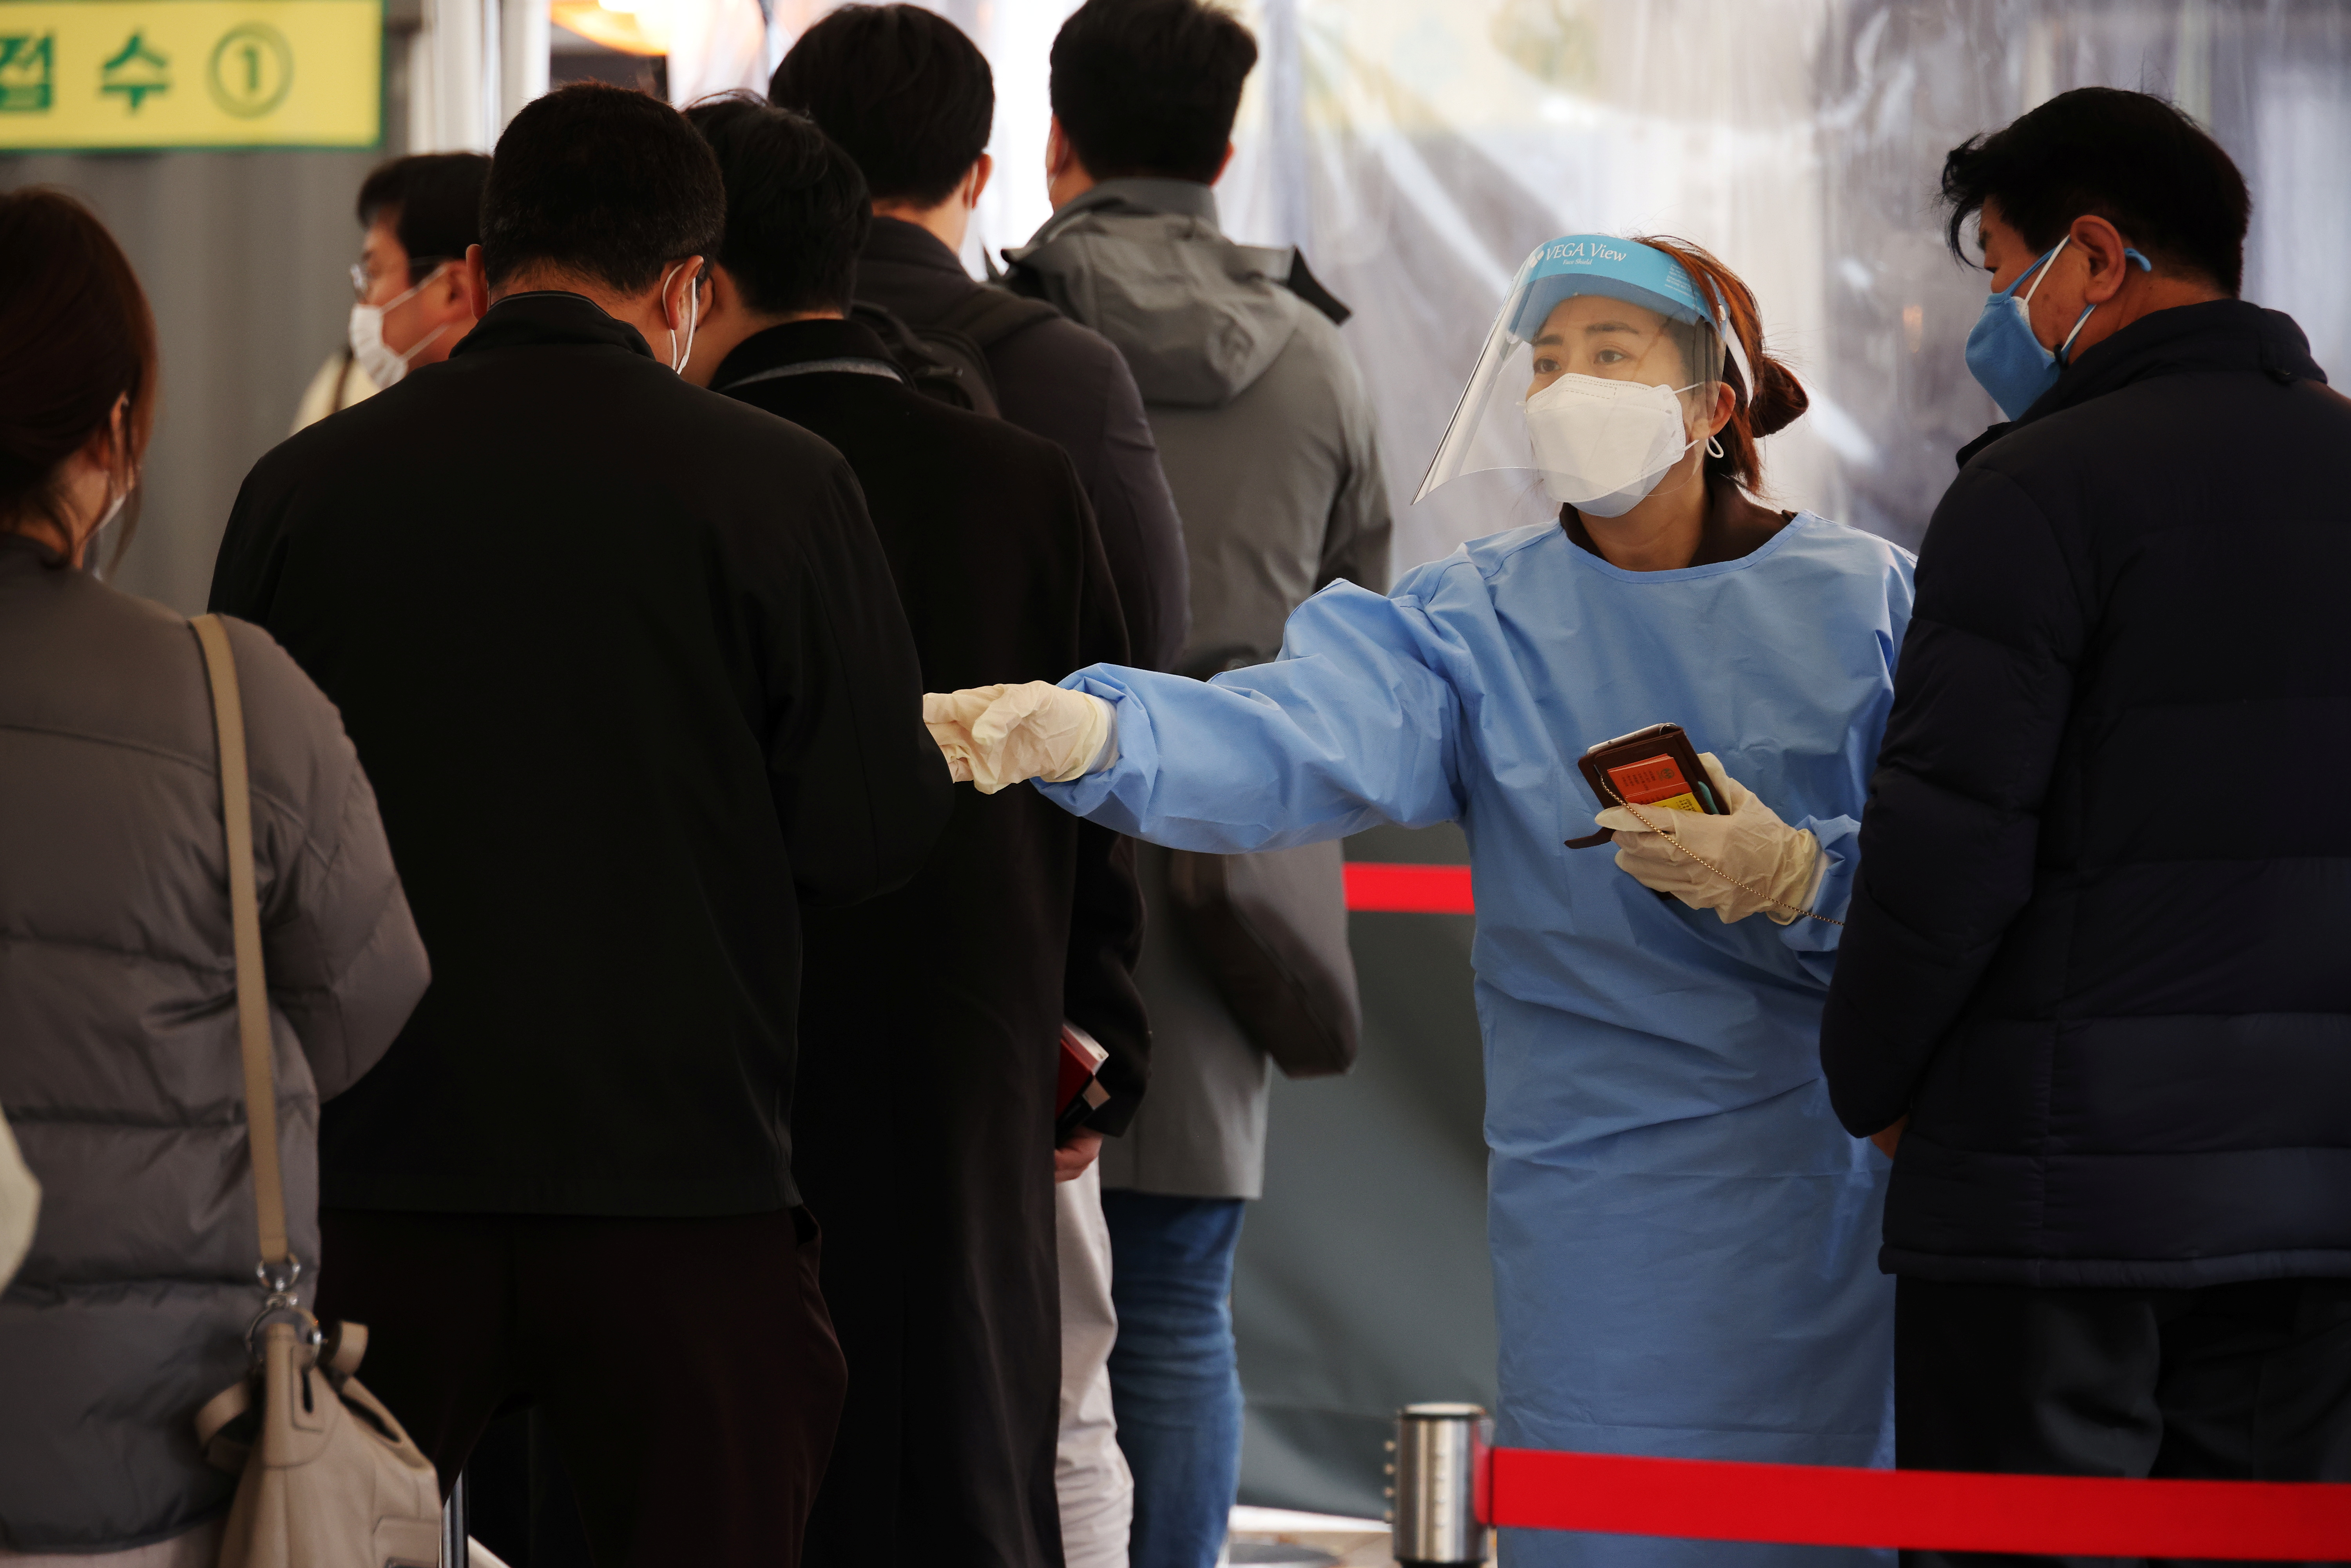 A health worker directs people arriving to undergo coronavirus disease (COVID-19) tests, at a testing site in Seoul, South Korea, November 10, 2021. REUTERS/Kim Hong-Ji